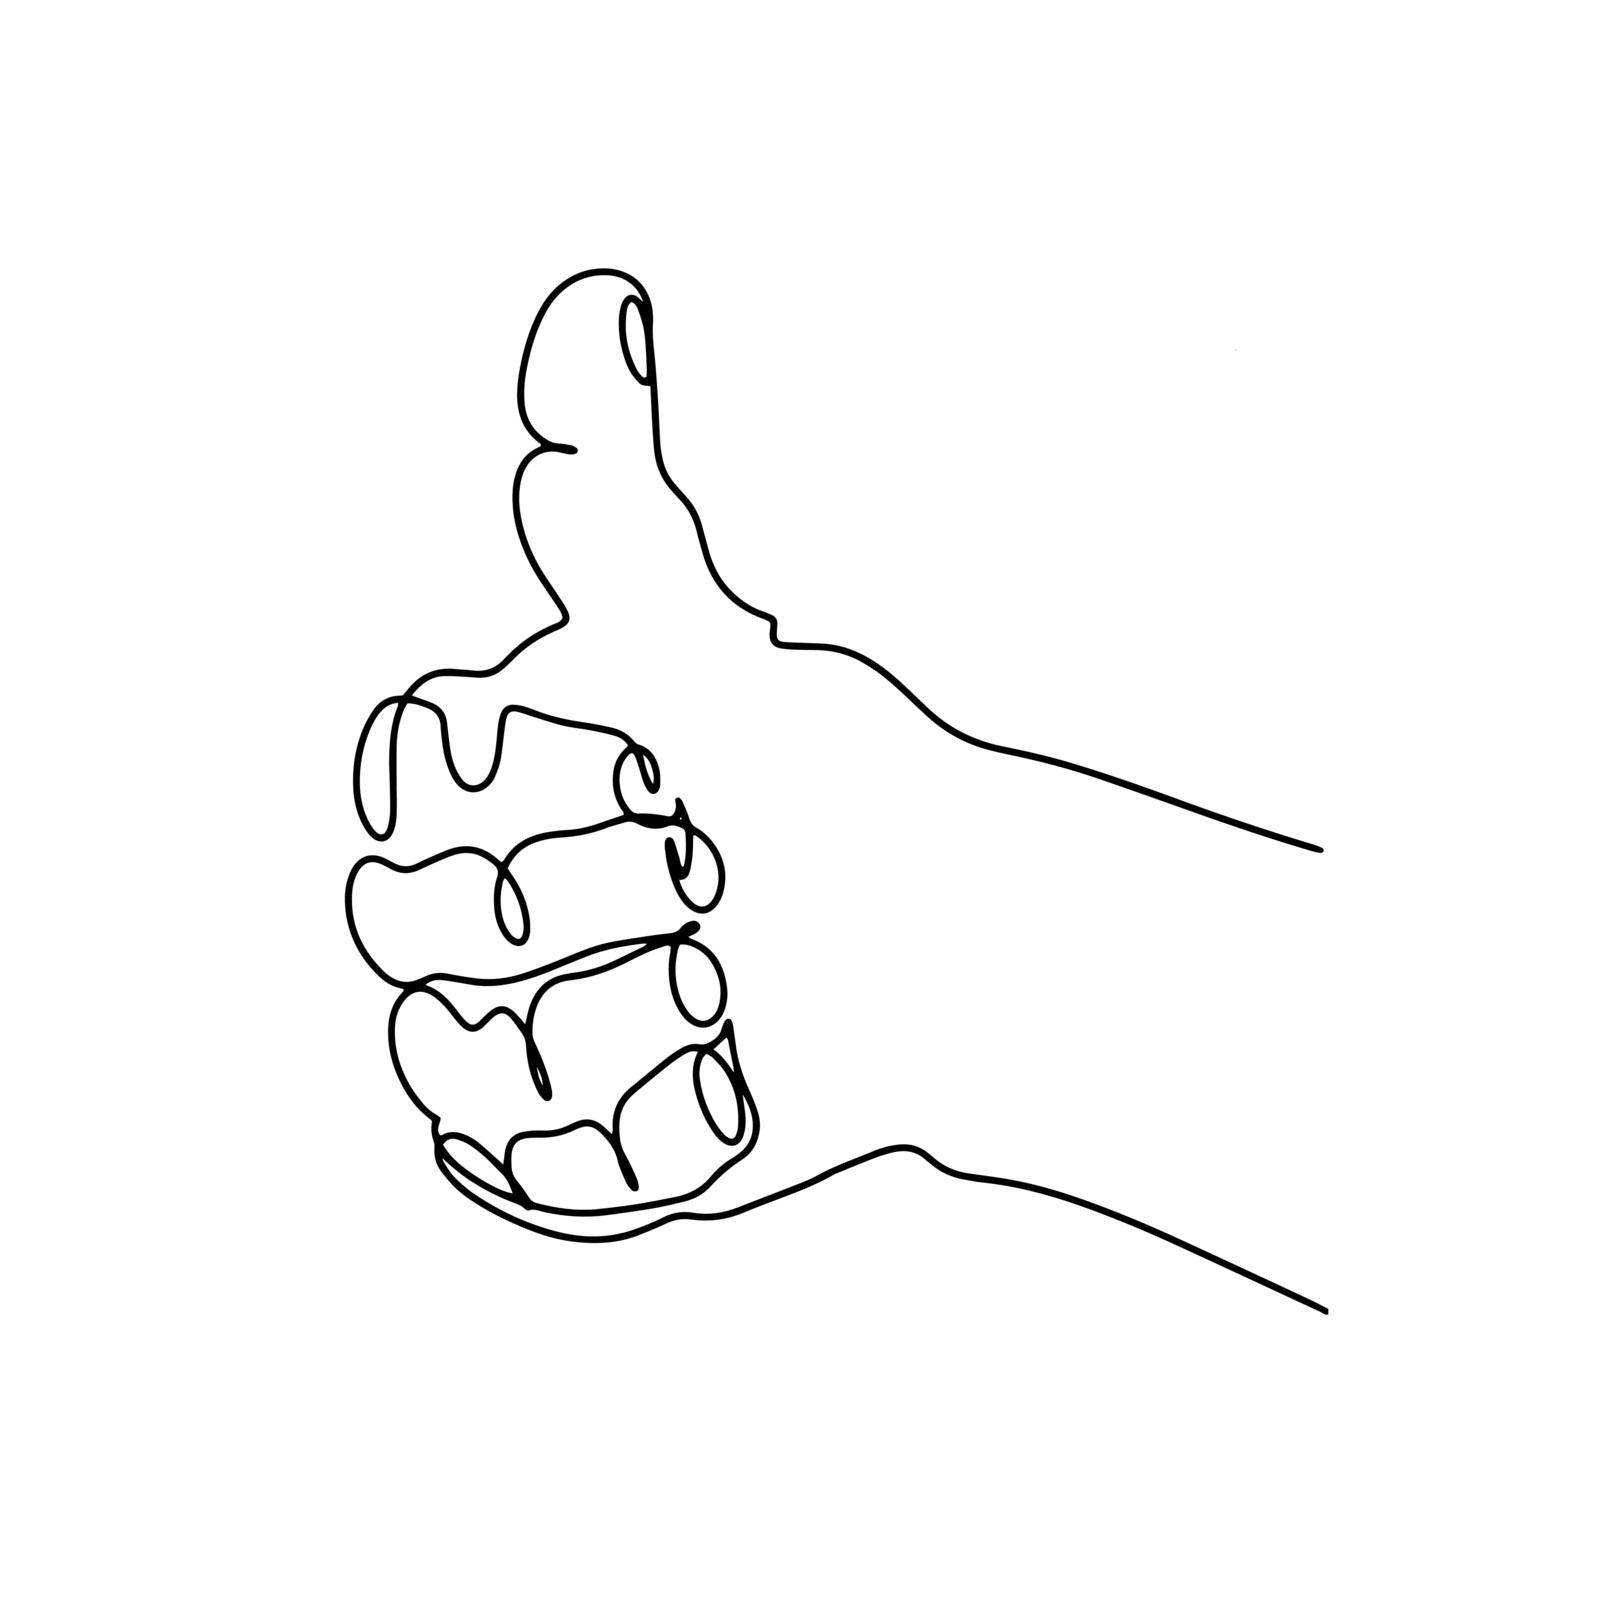 Hand fist with raised thumb up line art illustration vector by TassiaK